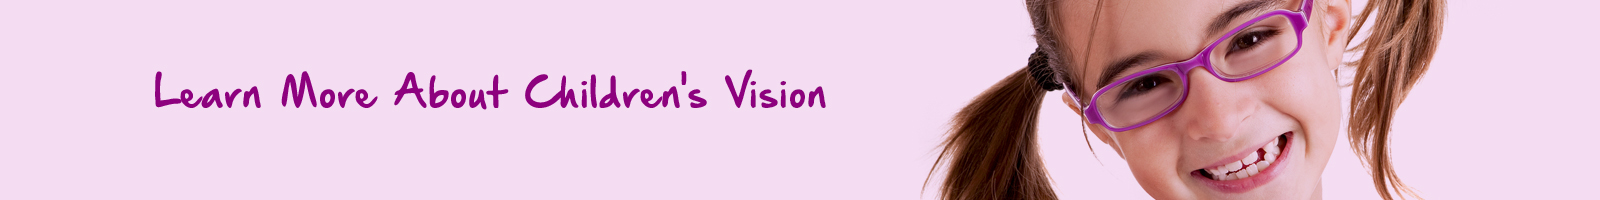 Childrens Vision 1600×200